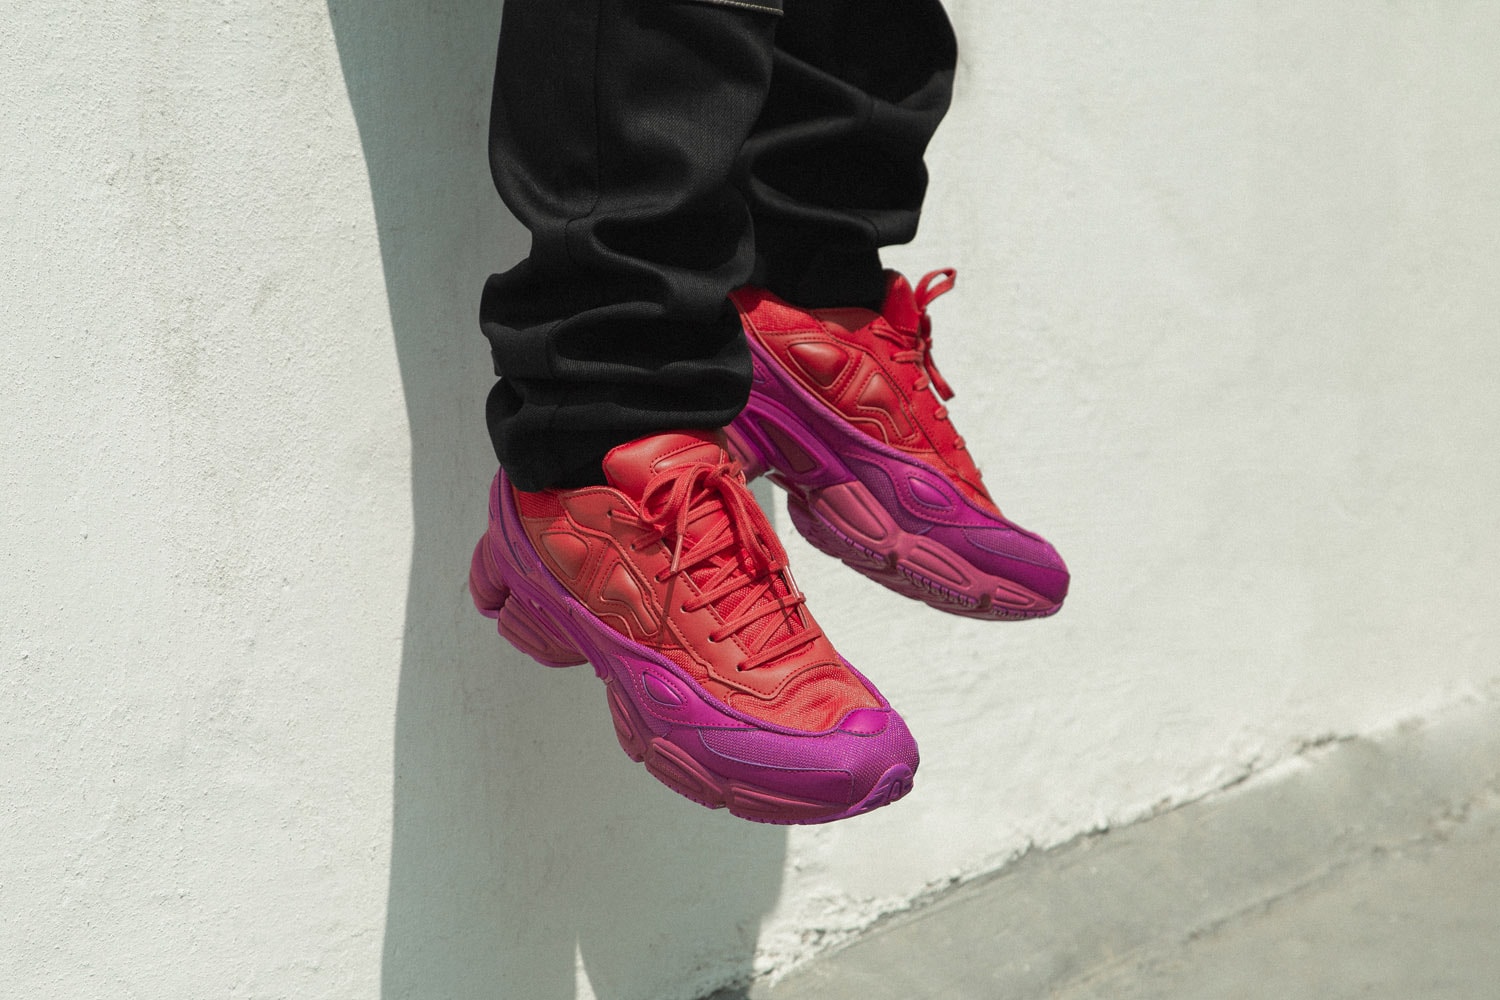 adidas by raf simons ozweego on foot look hbx pink purple